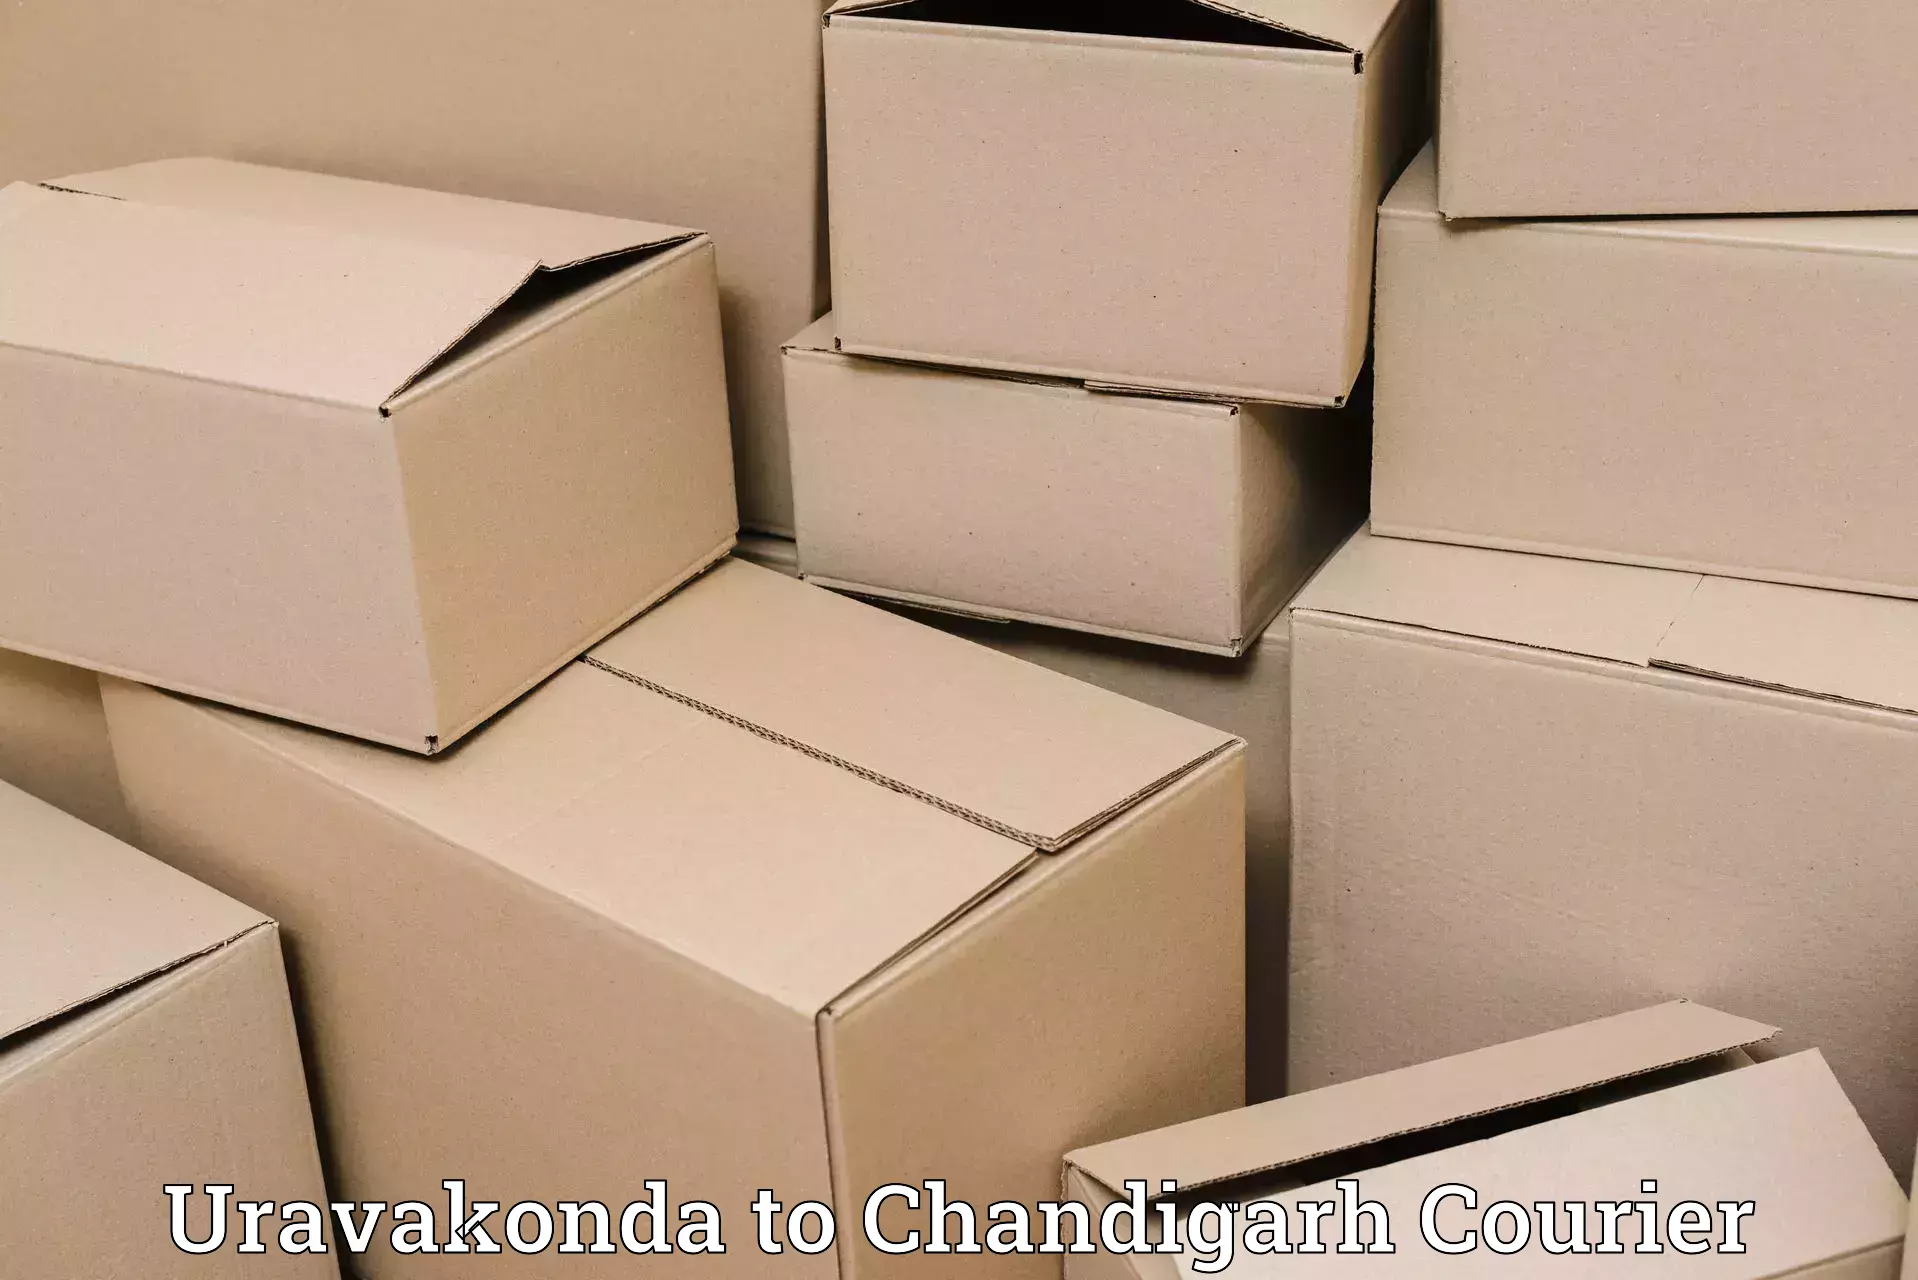 Luggage delivery network Uravakonda to Chandigarh